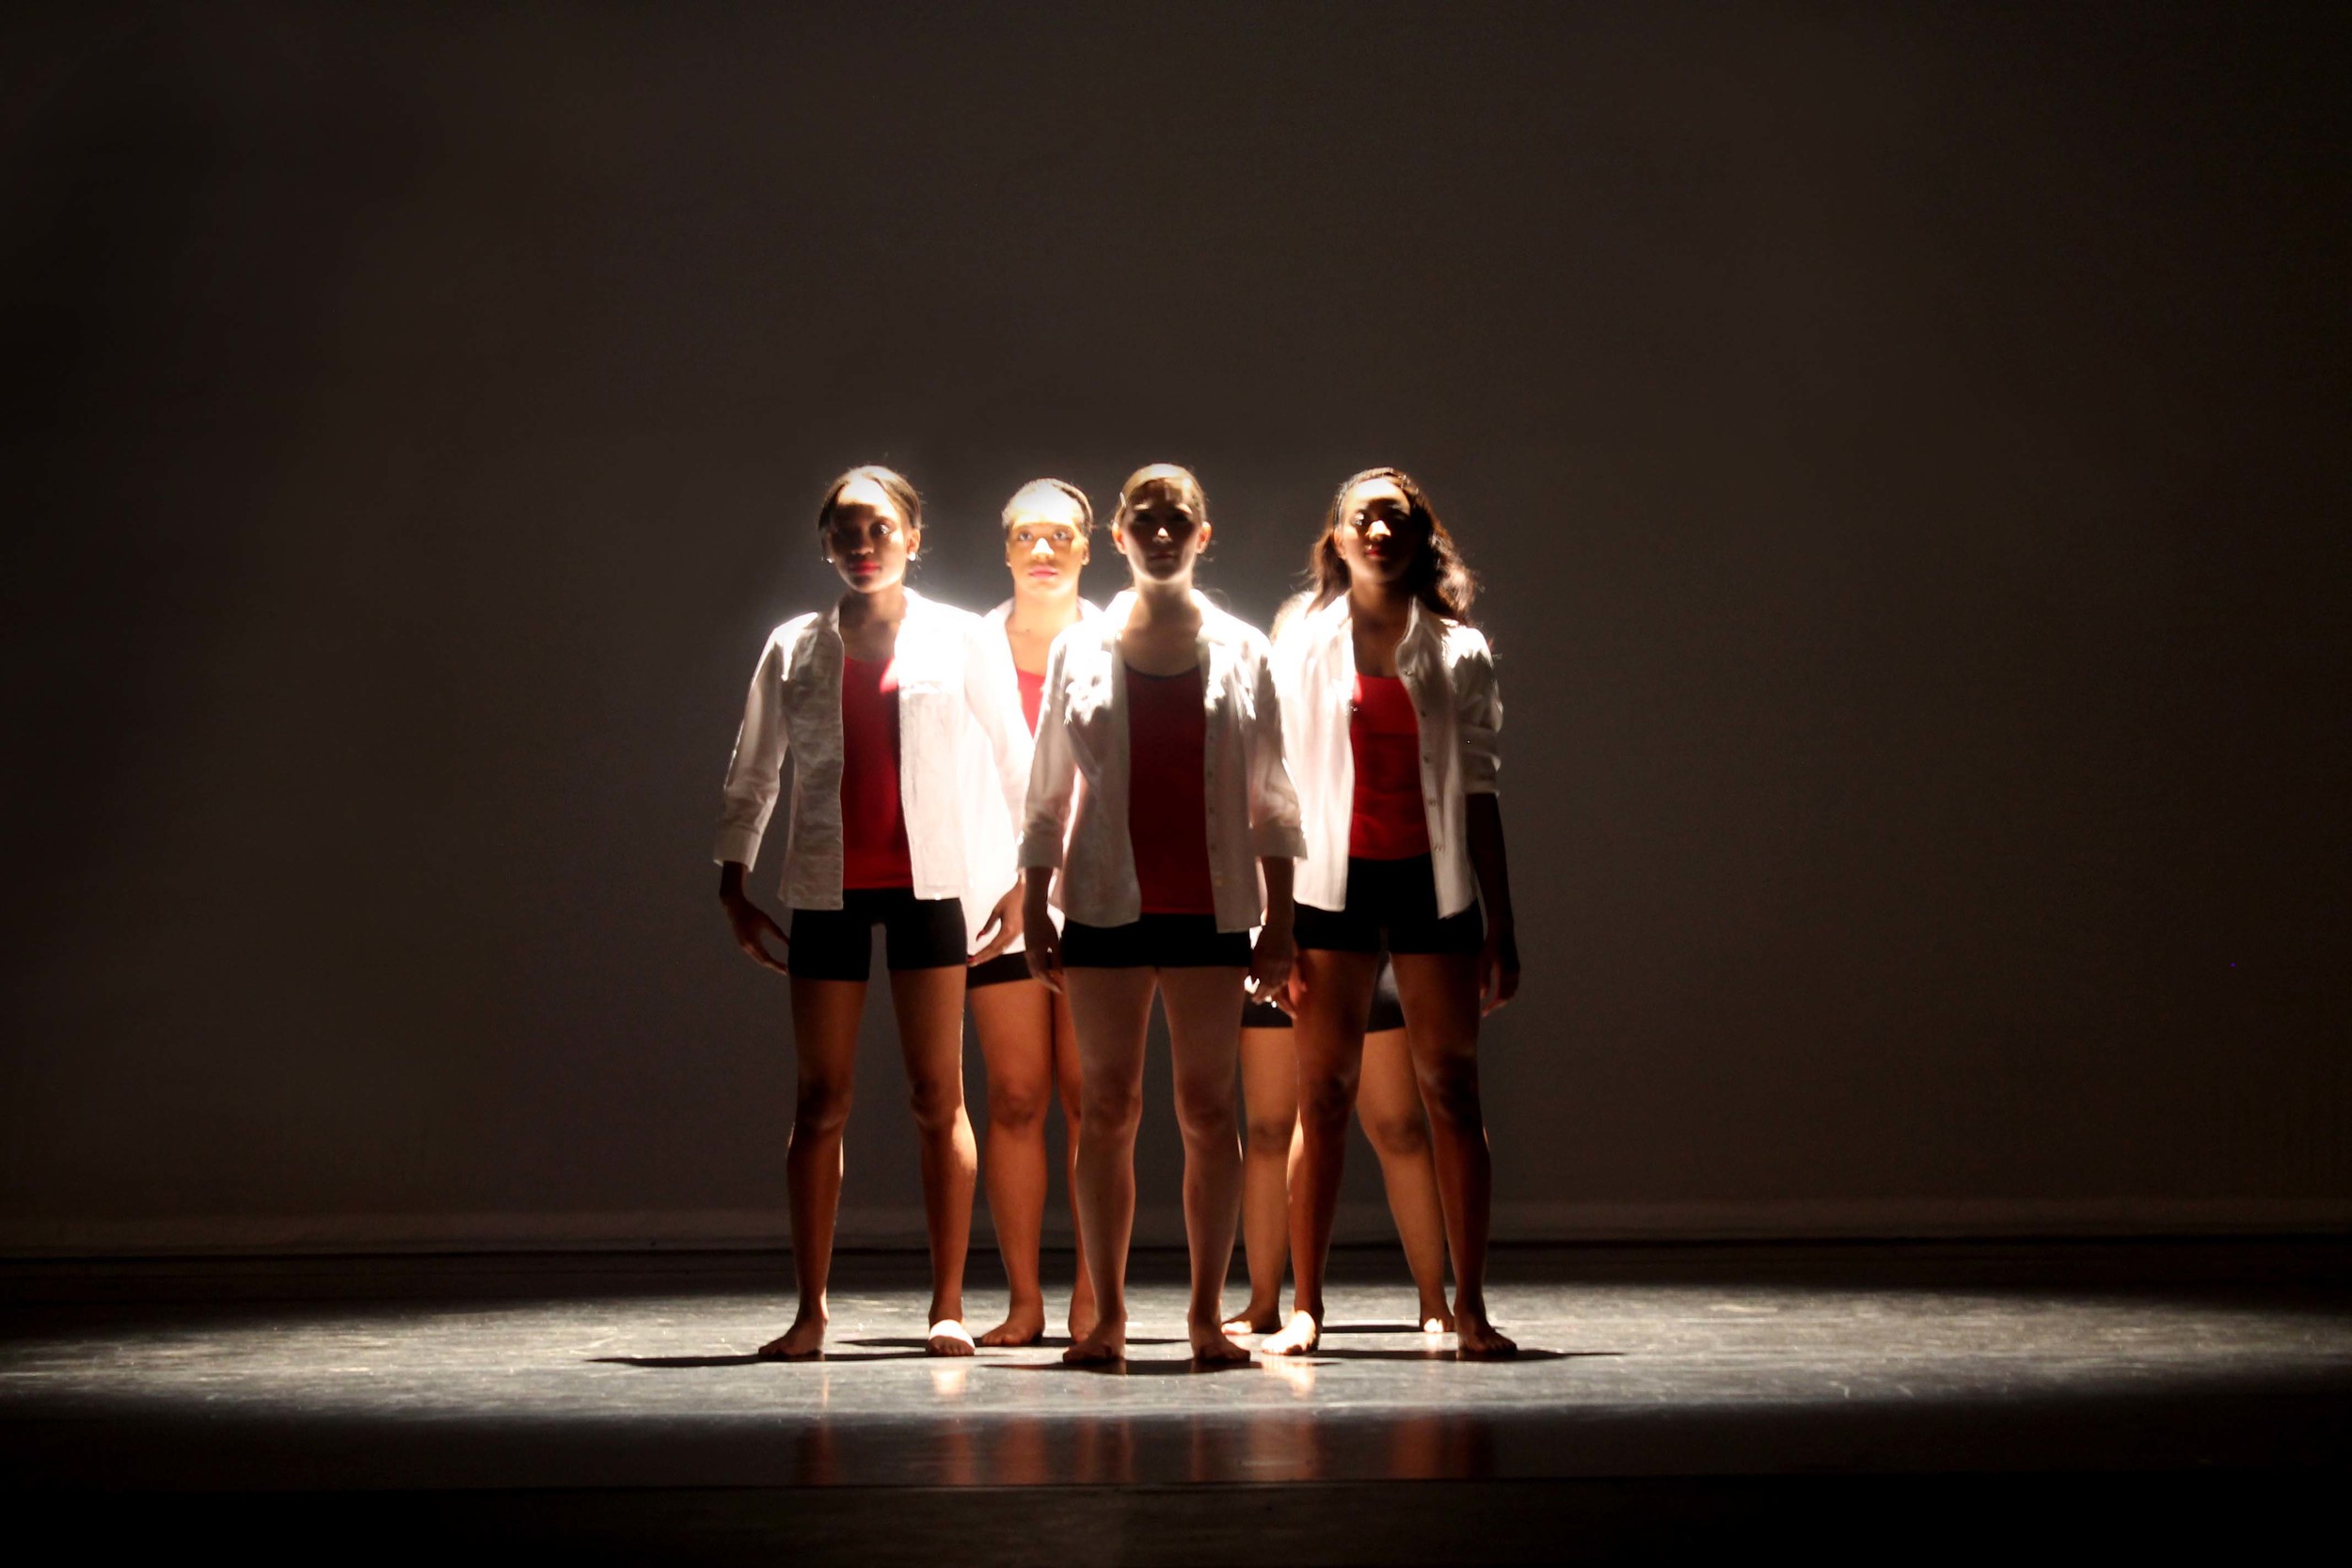   Student Choreograph Showcase 2014   Lighting Designer: Collin Lindgren  Photography: Cassandra Green 